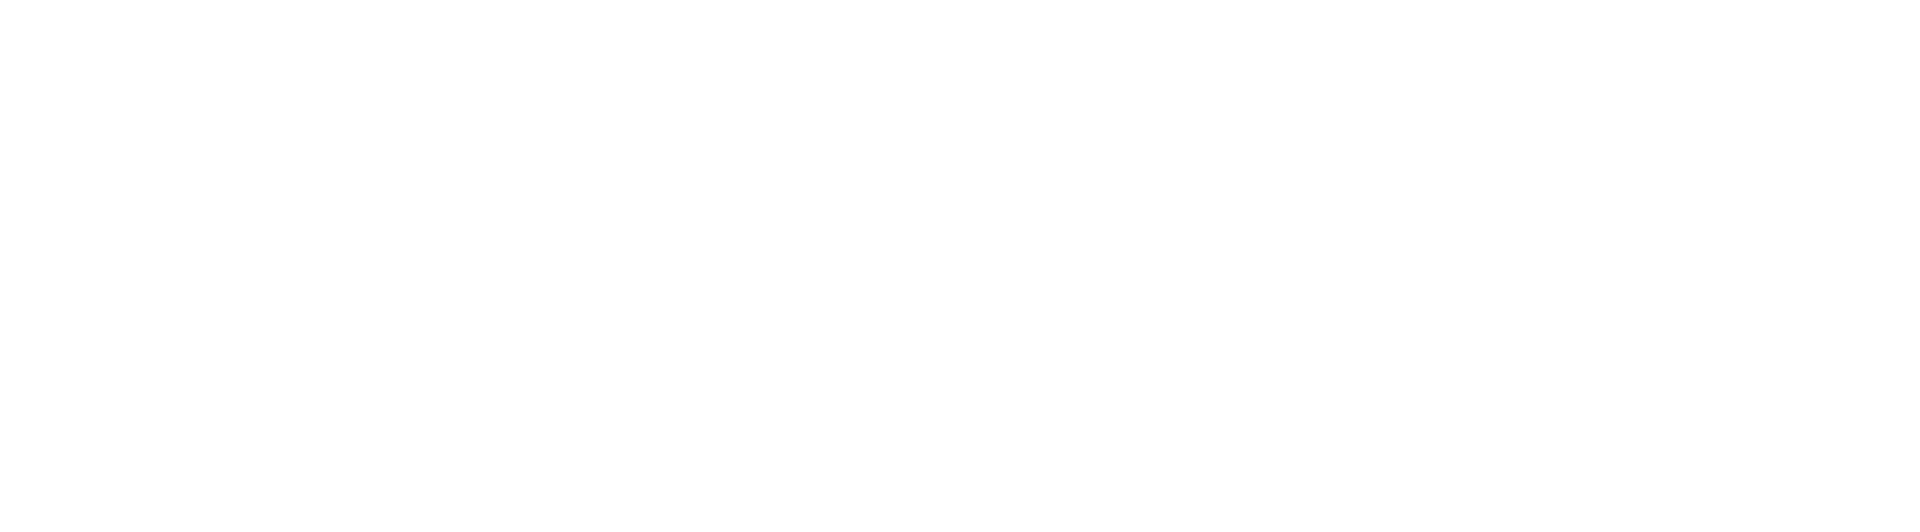 proxiibid logo